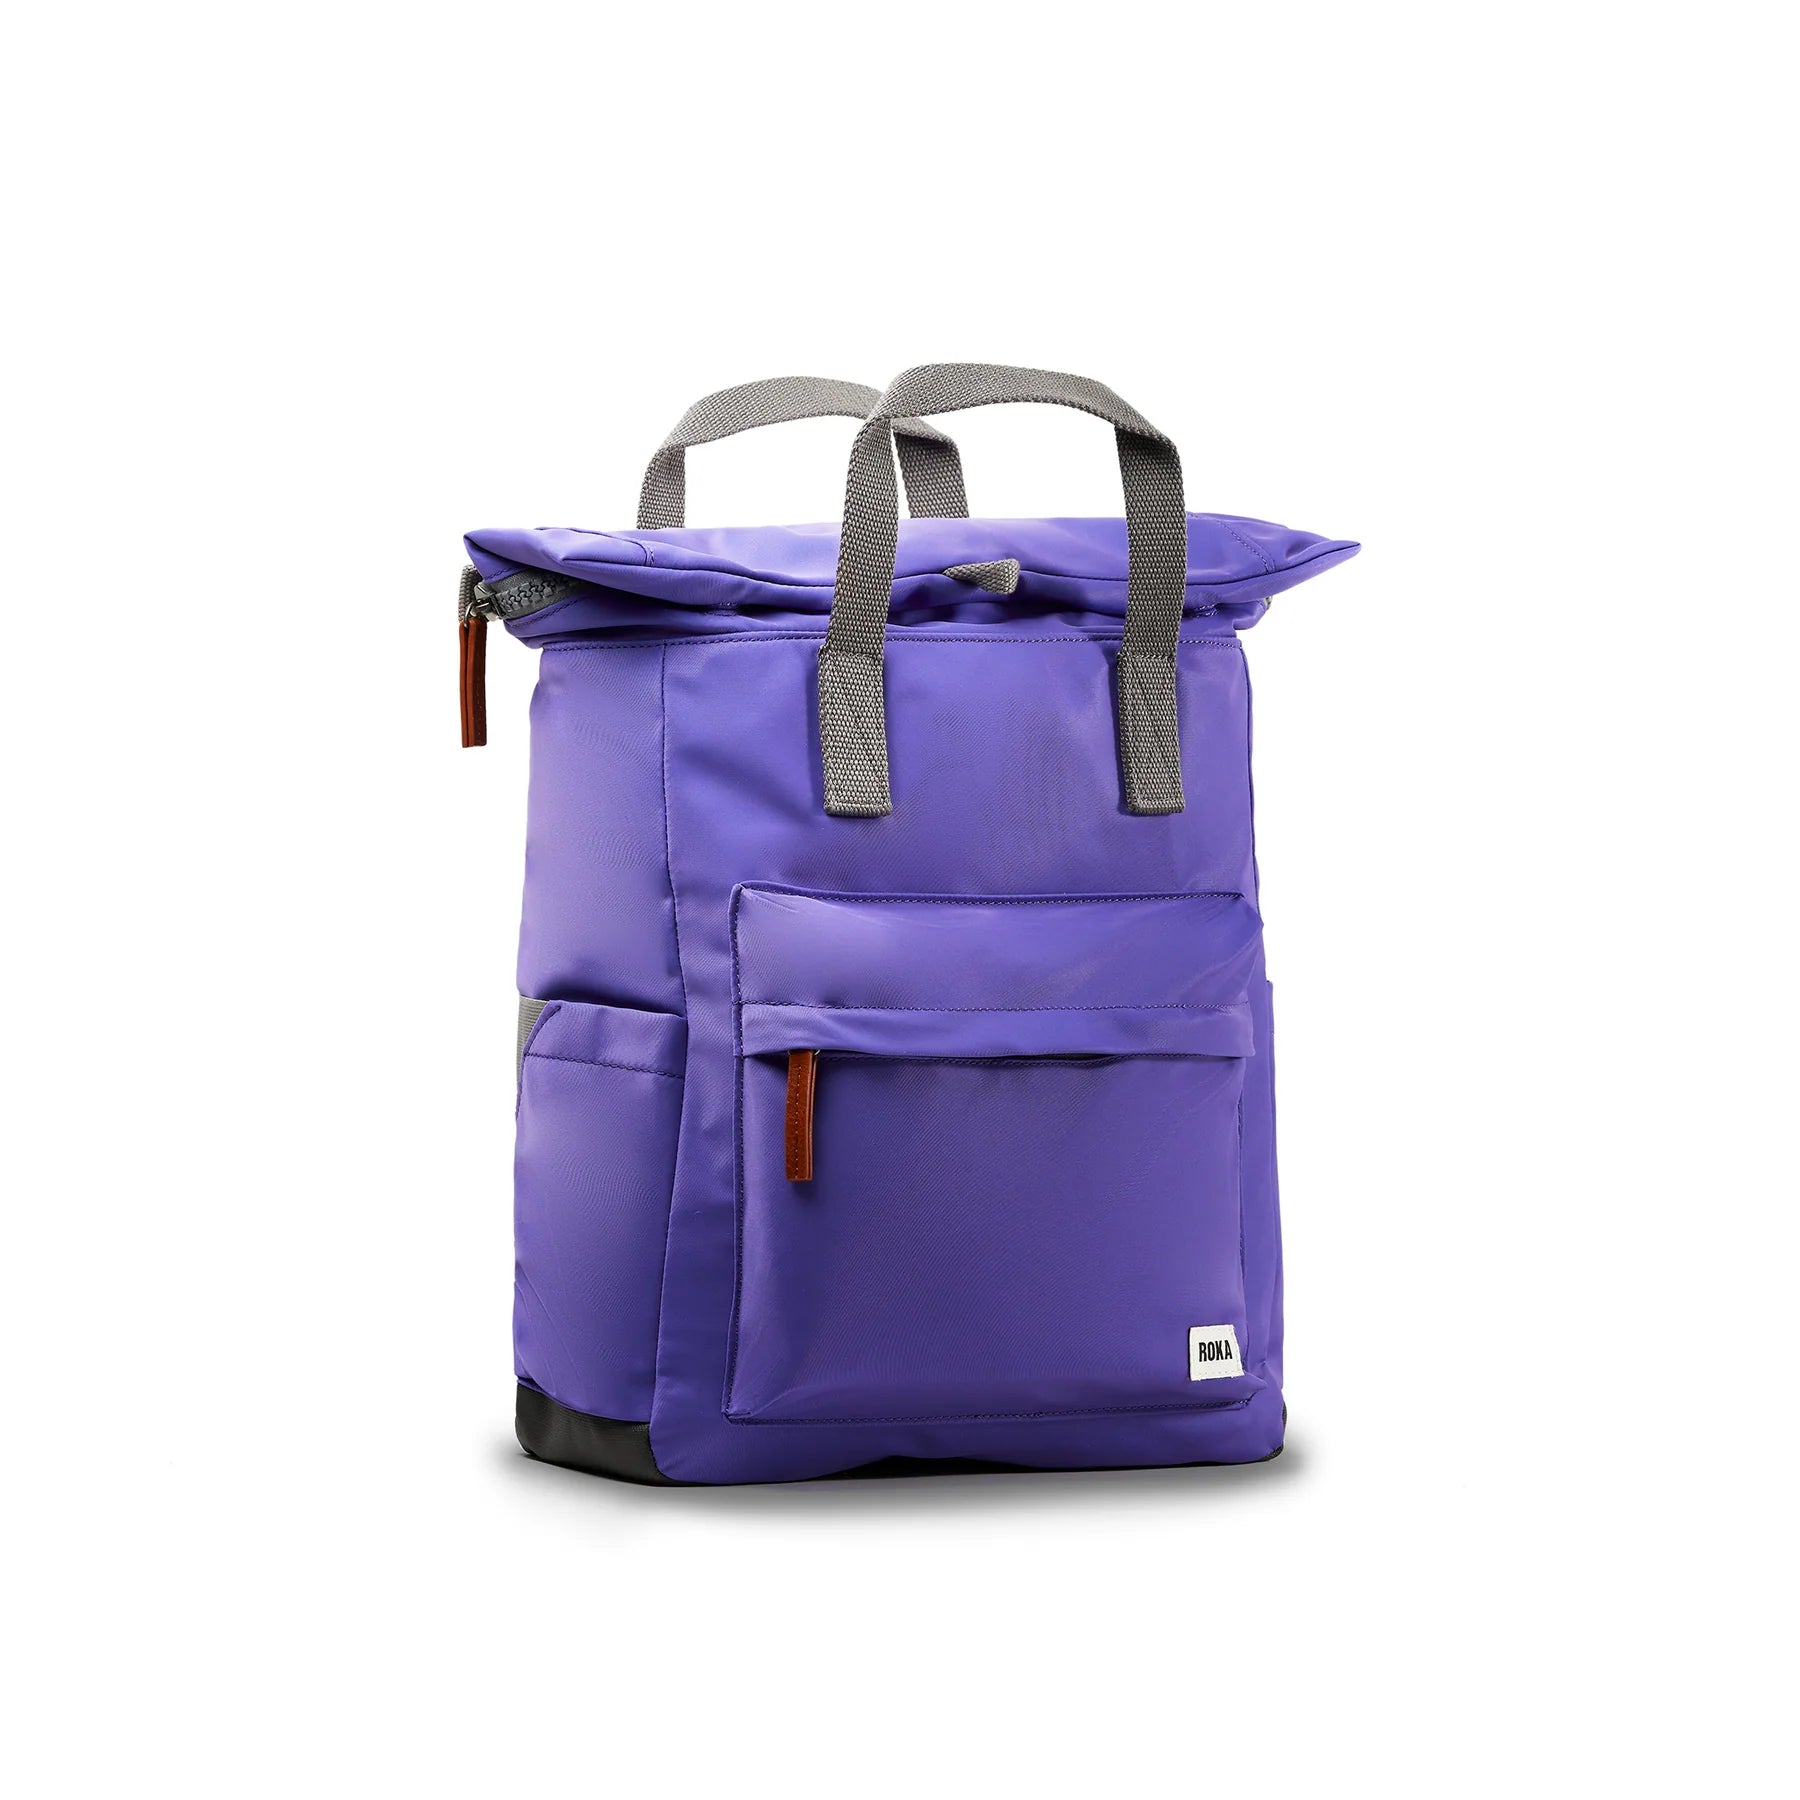 ROKA | Canfield Bag Small - Peri Purple